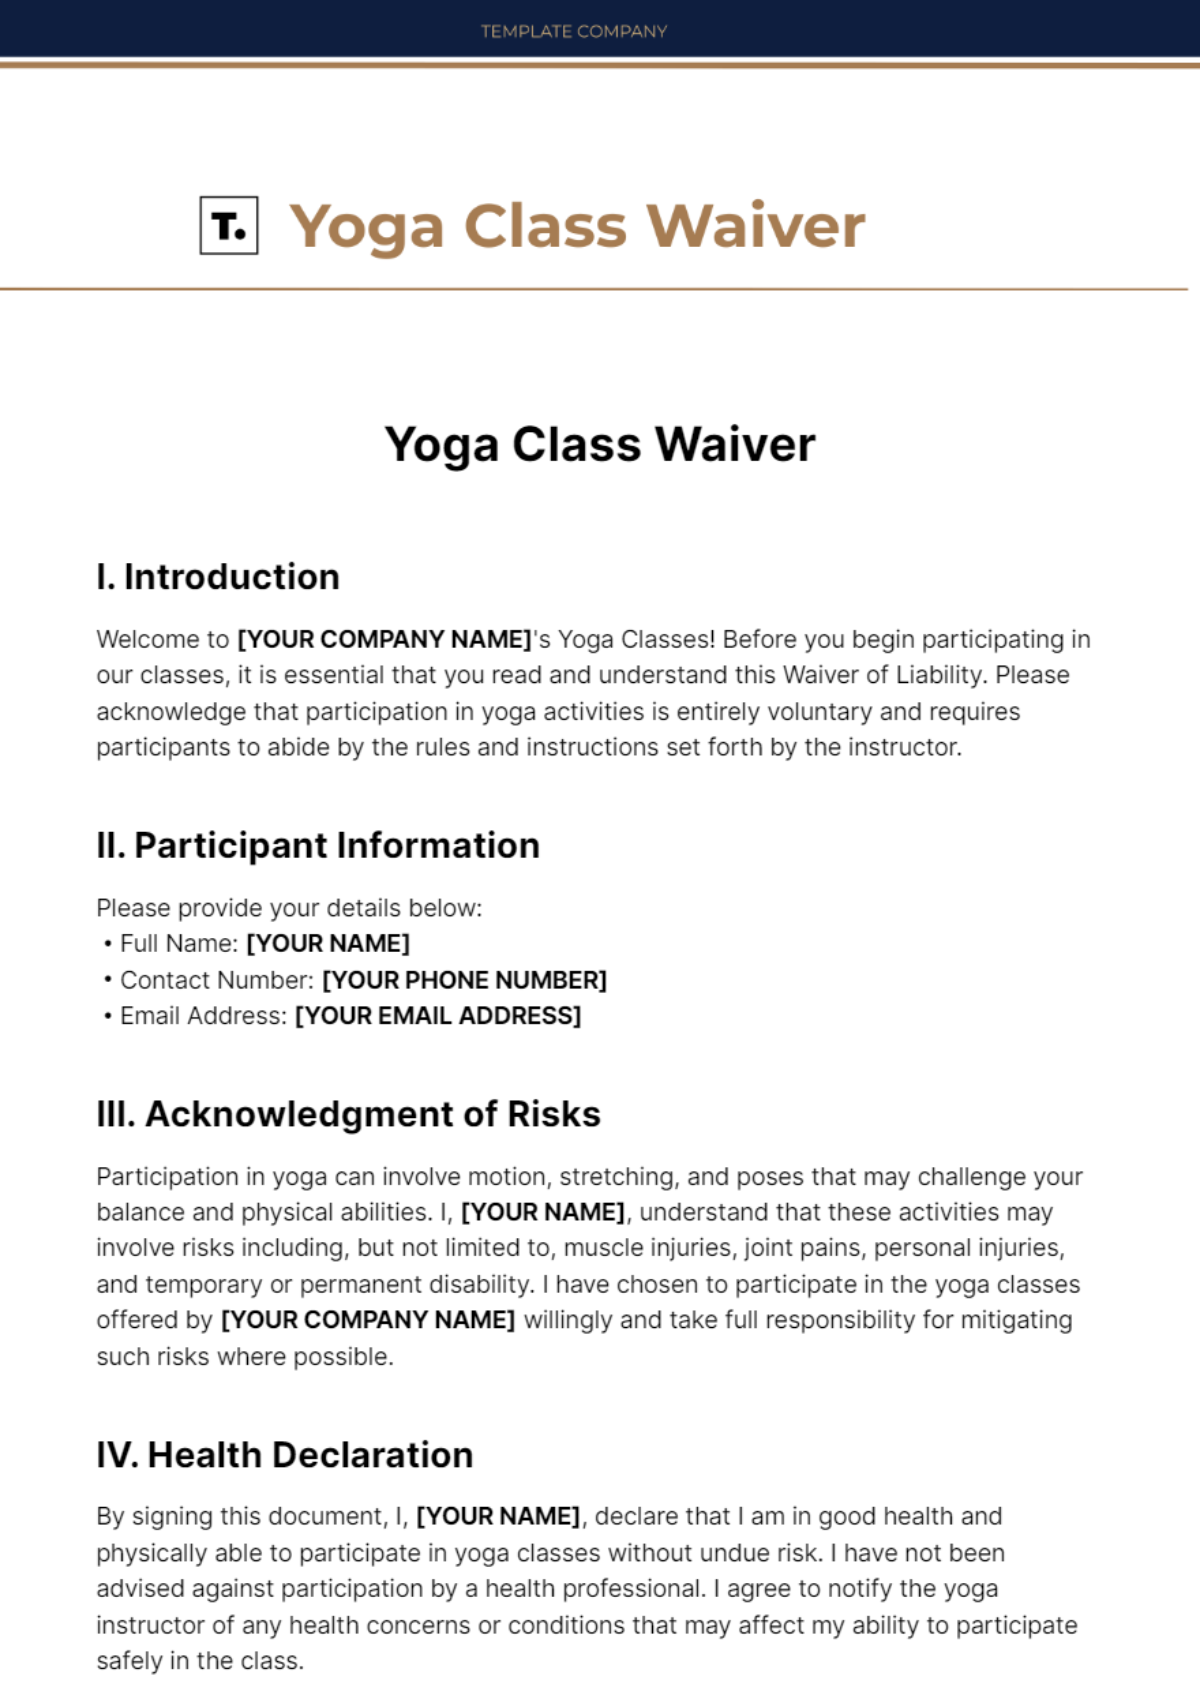 Free Yoga Class Waiver Template